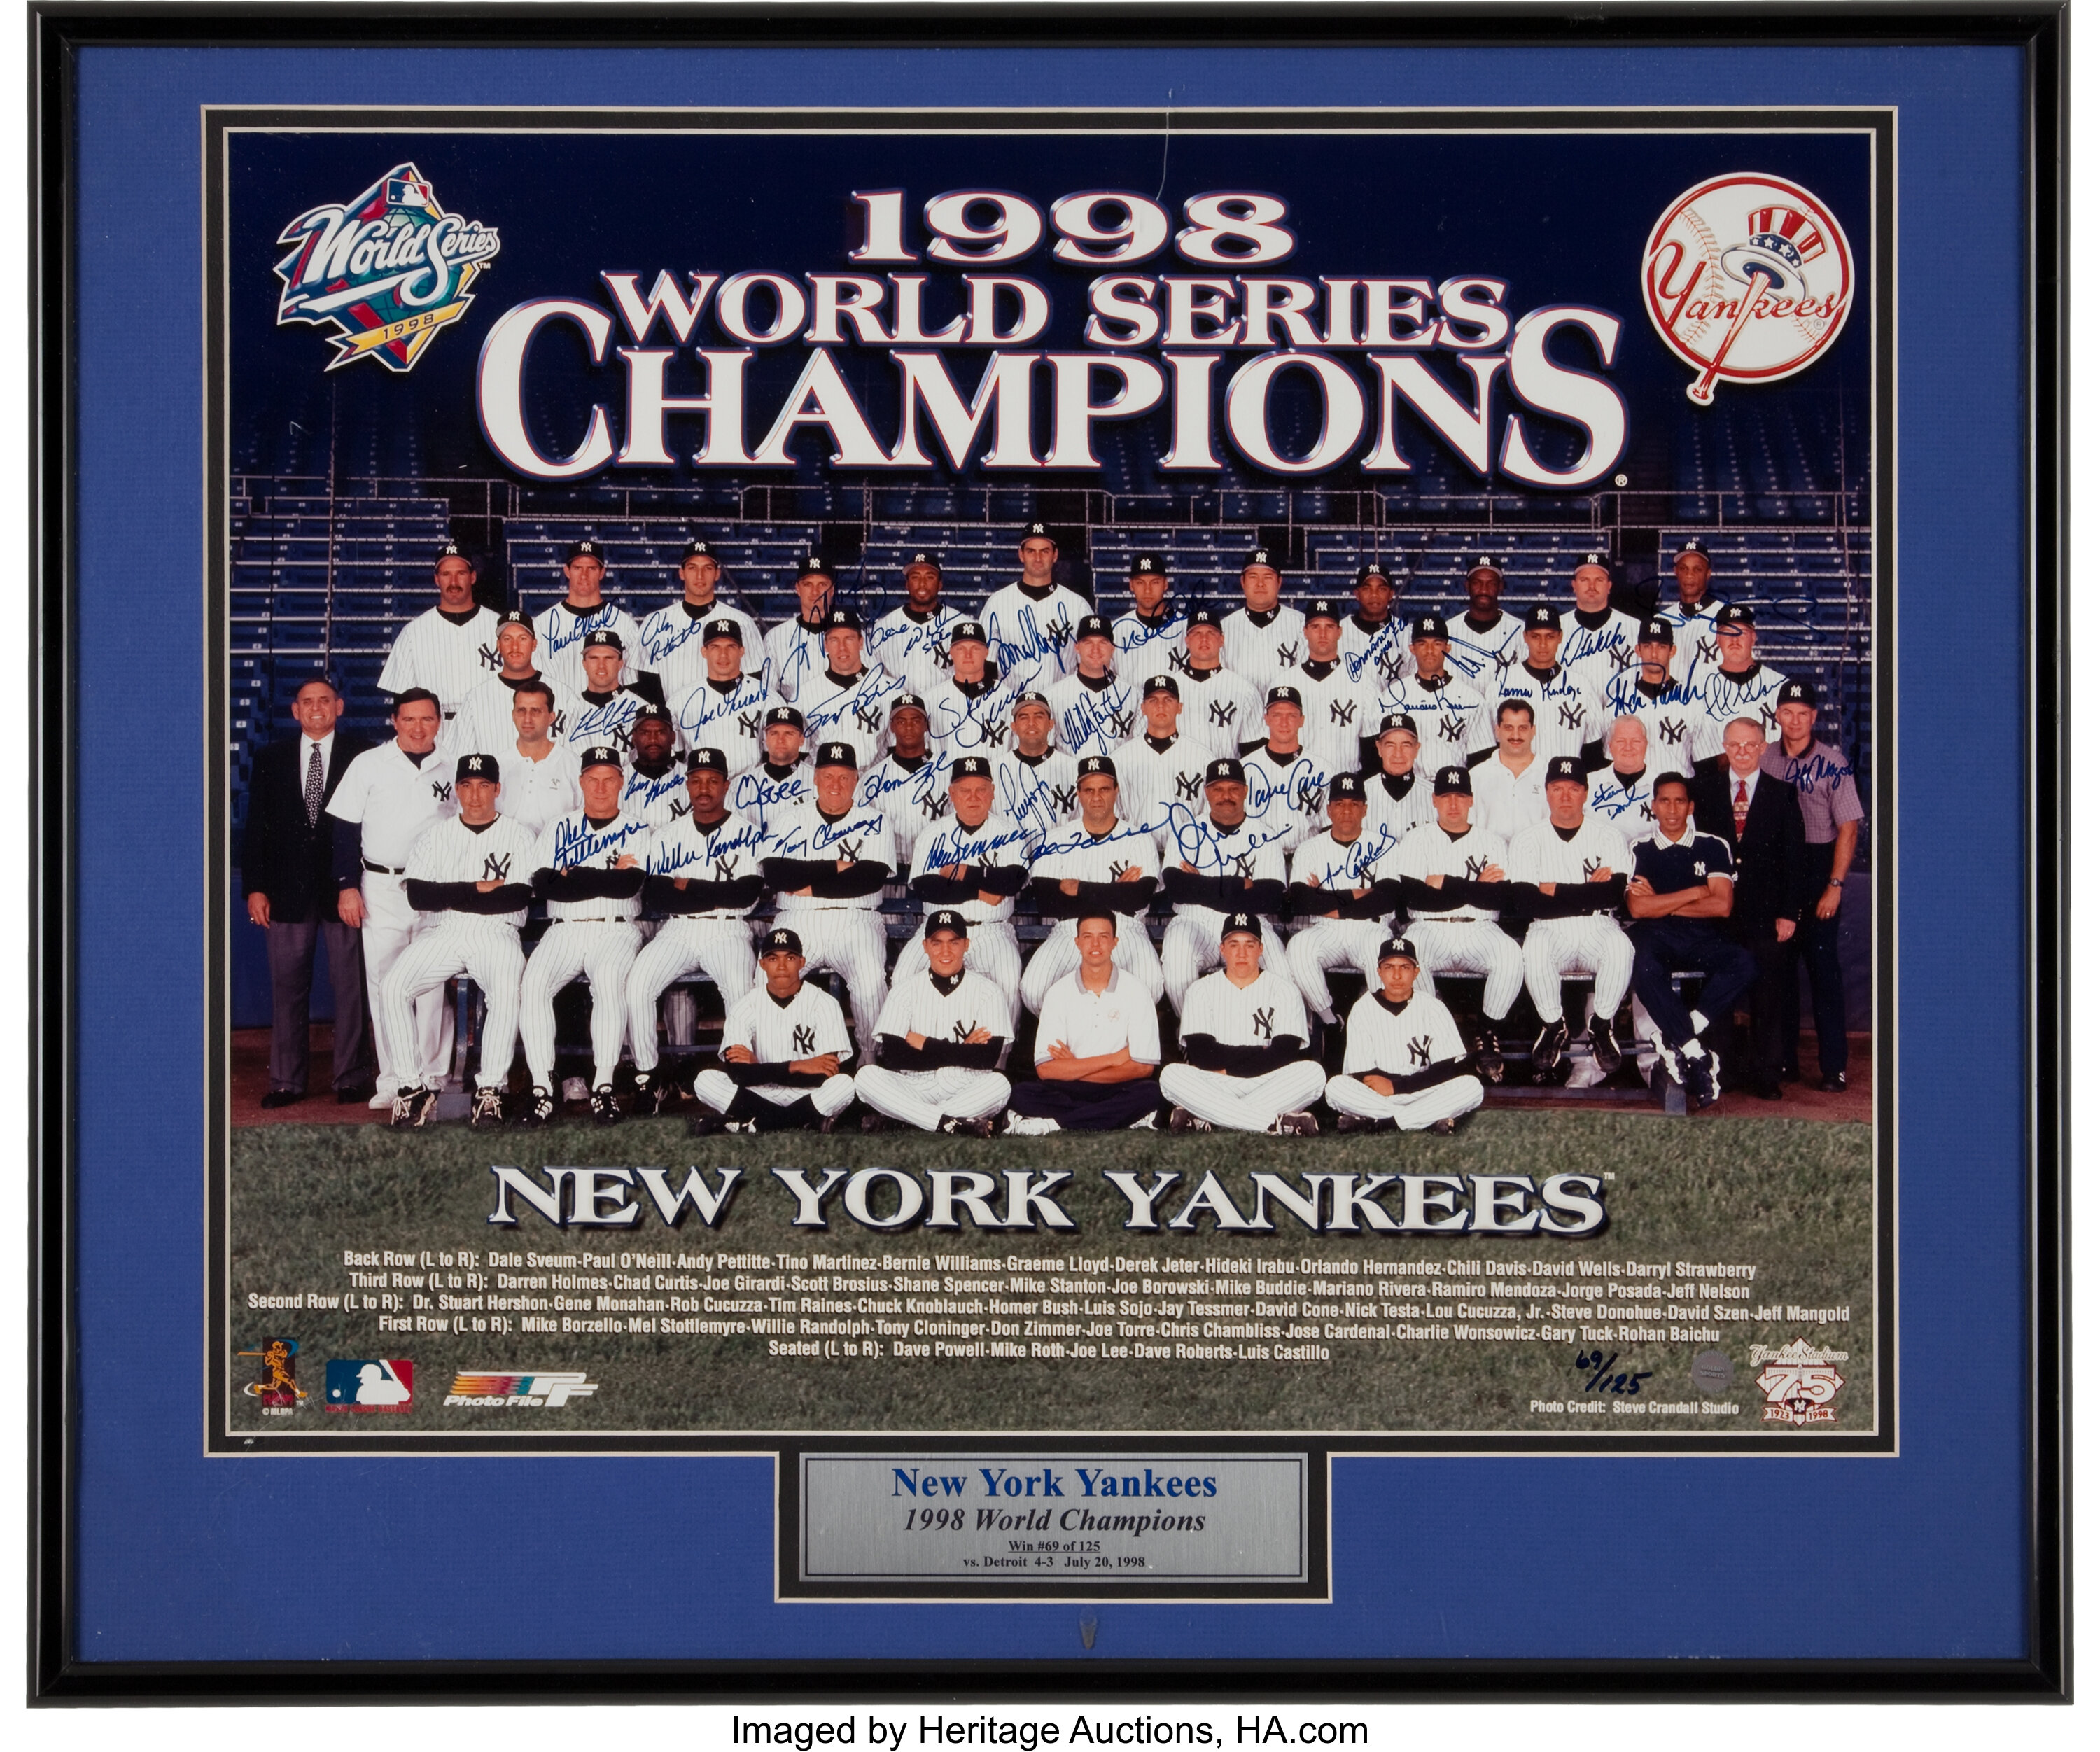 Yankees 1998 World Series Champ. Team photo